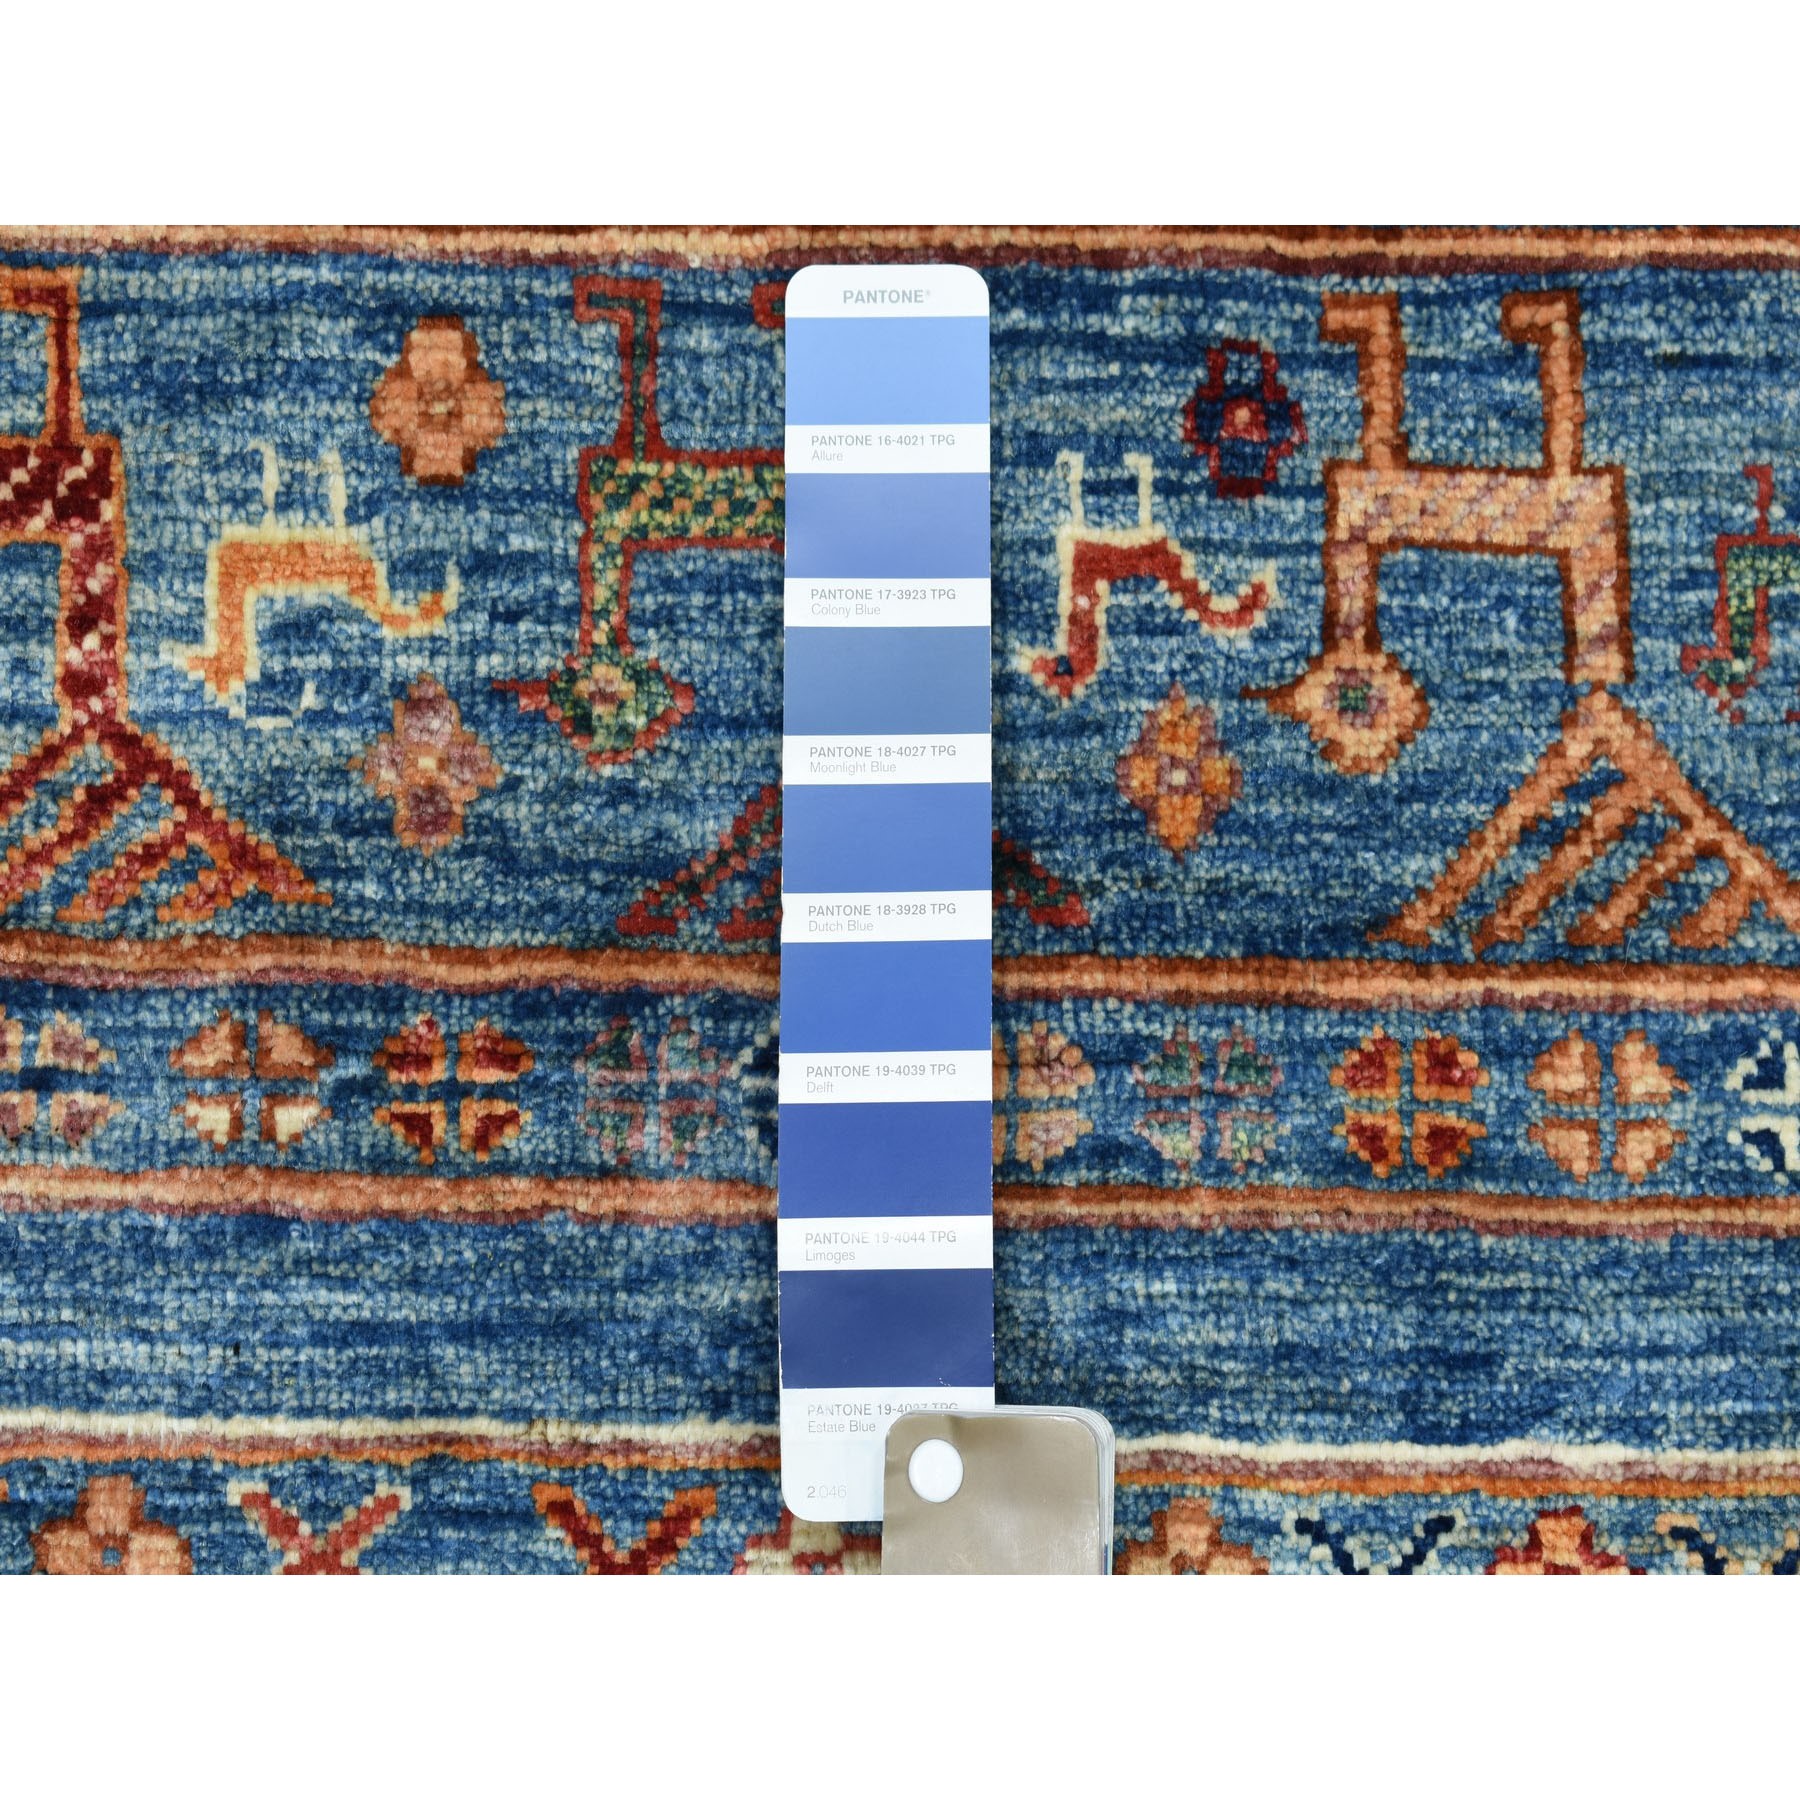 3-4 x5-1  Khorjin Design Blue Super Kazak Pure Wool Hand Knotted Oriental Rug 